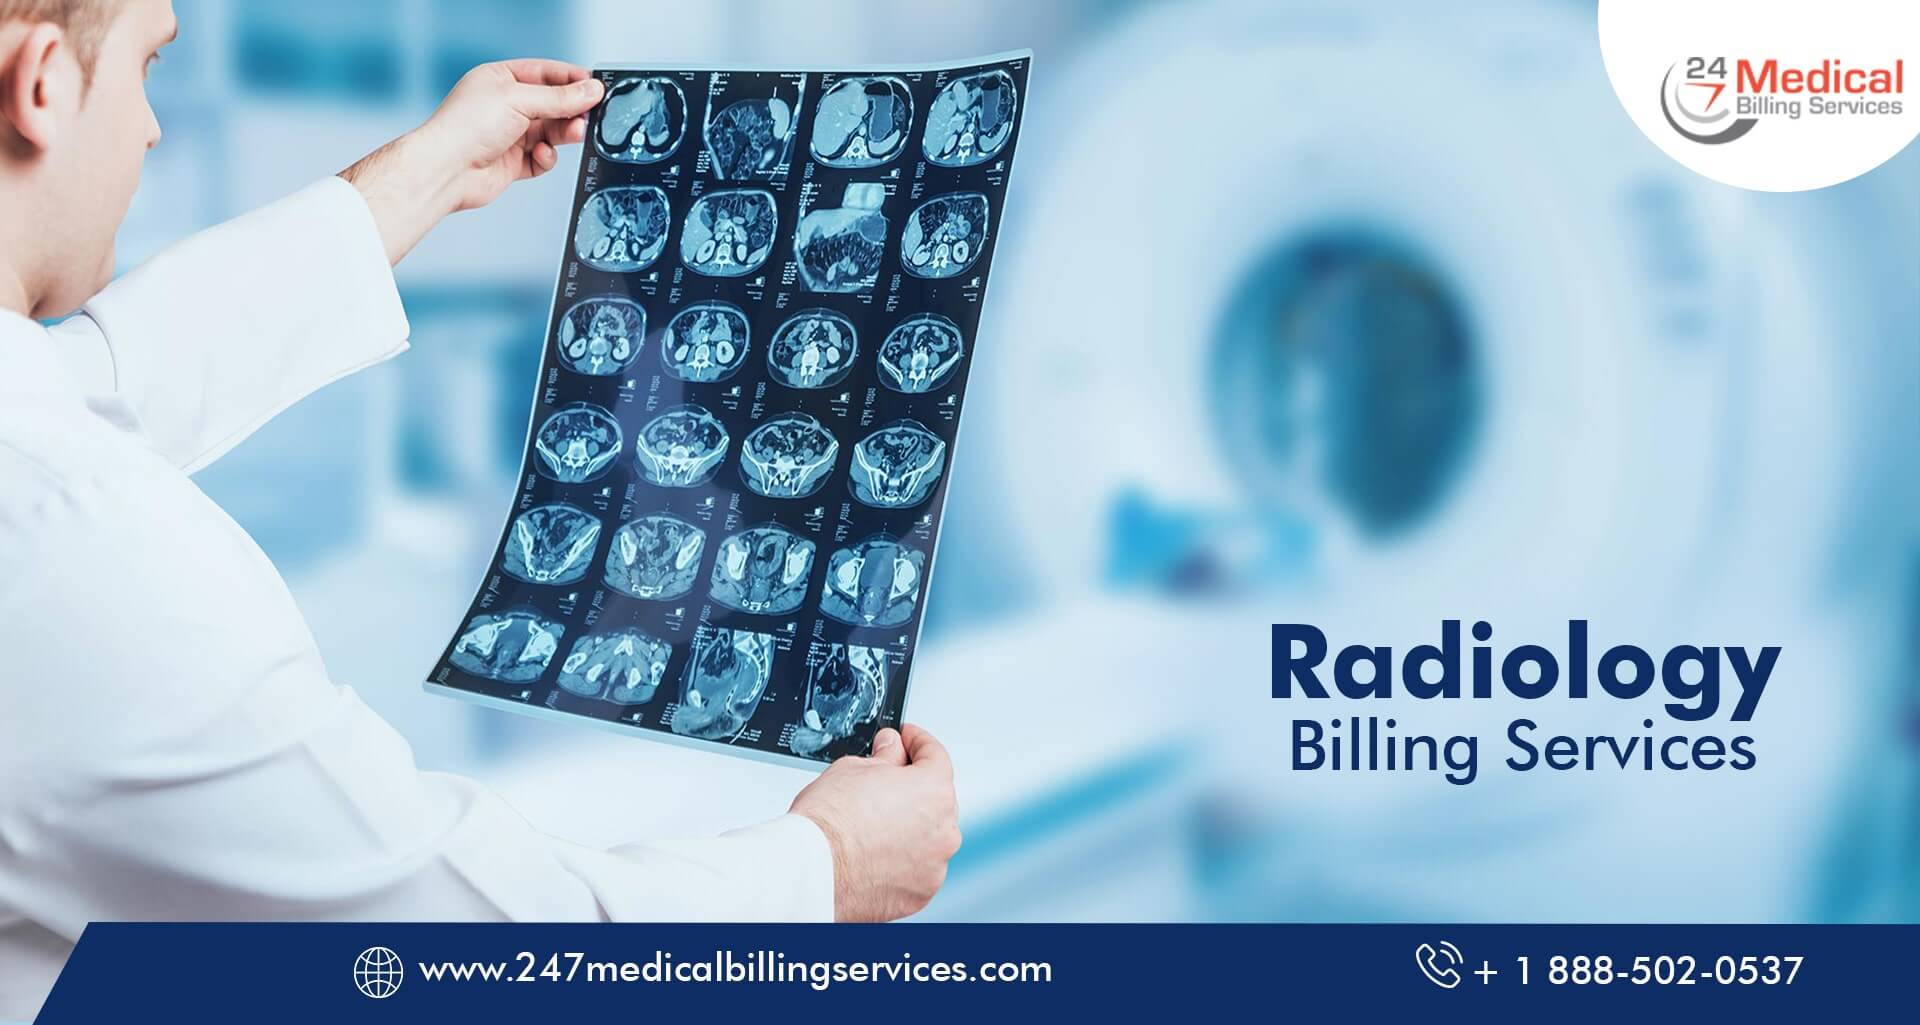  Radiology Billing Services in Philadelphia, Pennsylvania (PA)